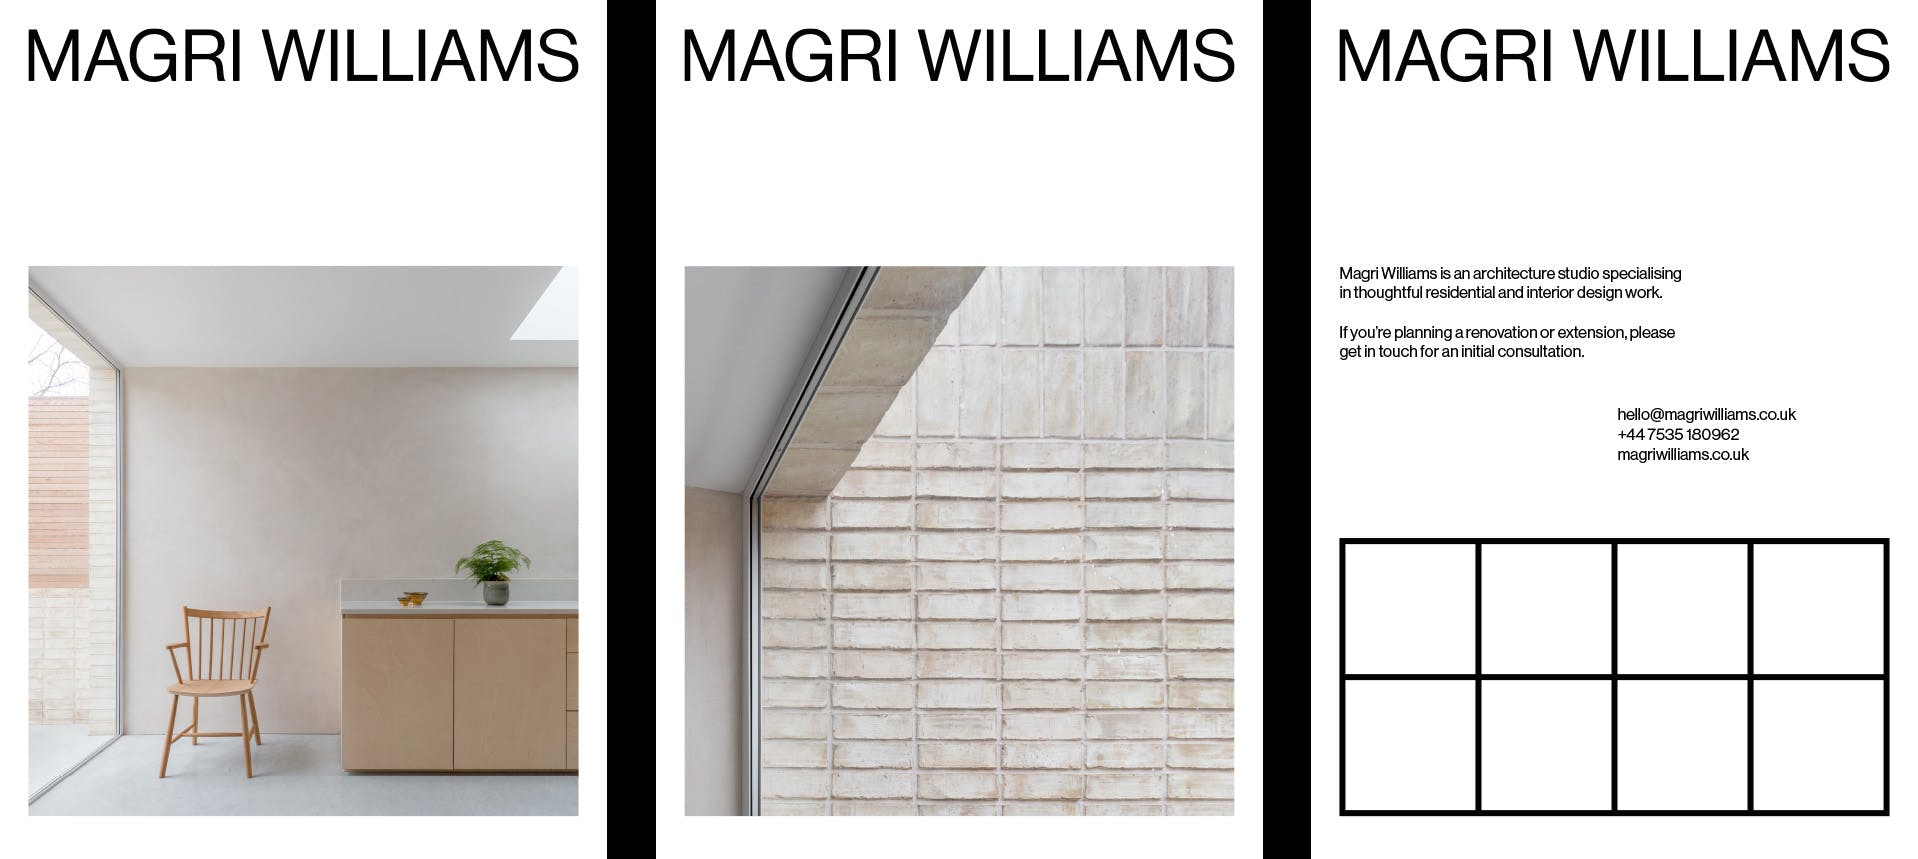 Three posters for Magri Williams architecture studio.